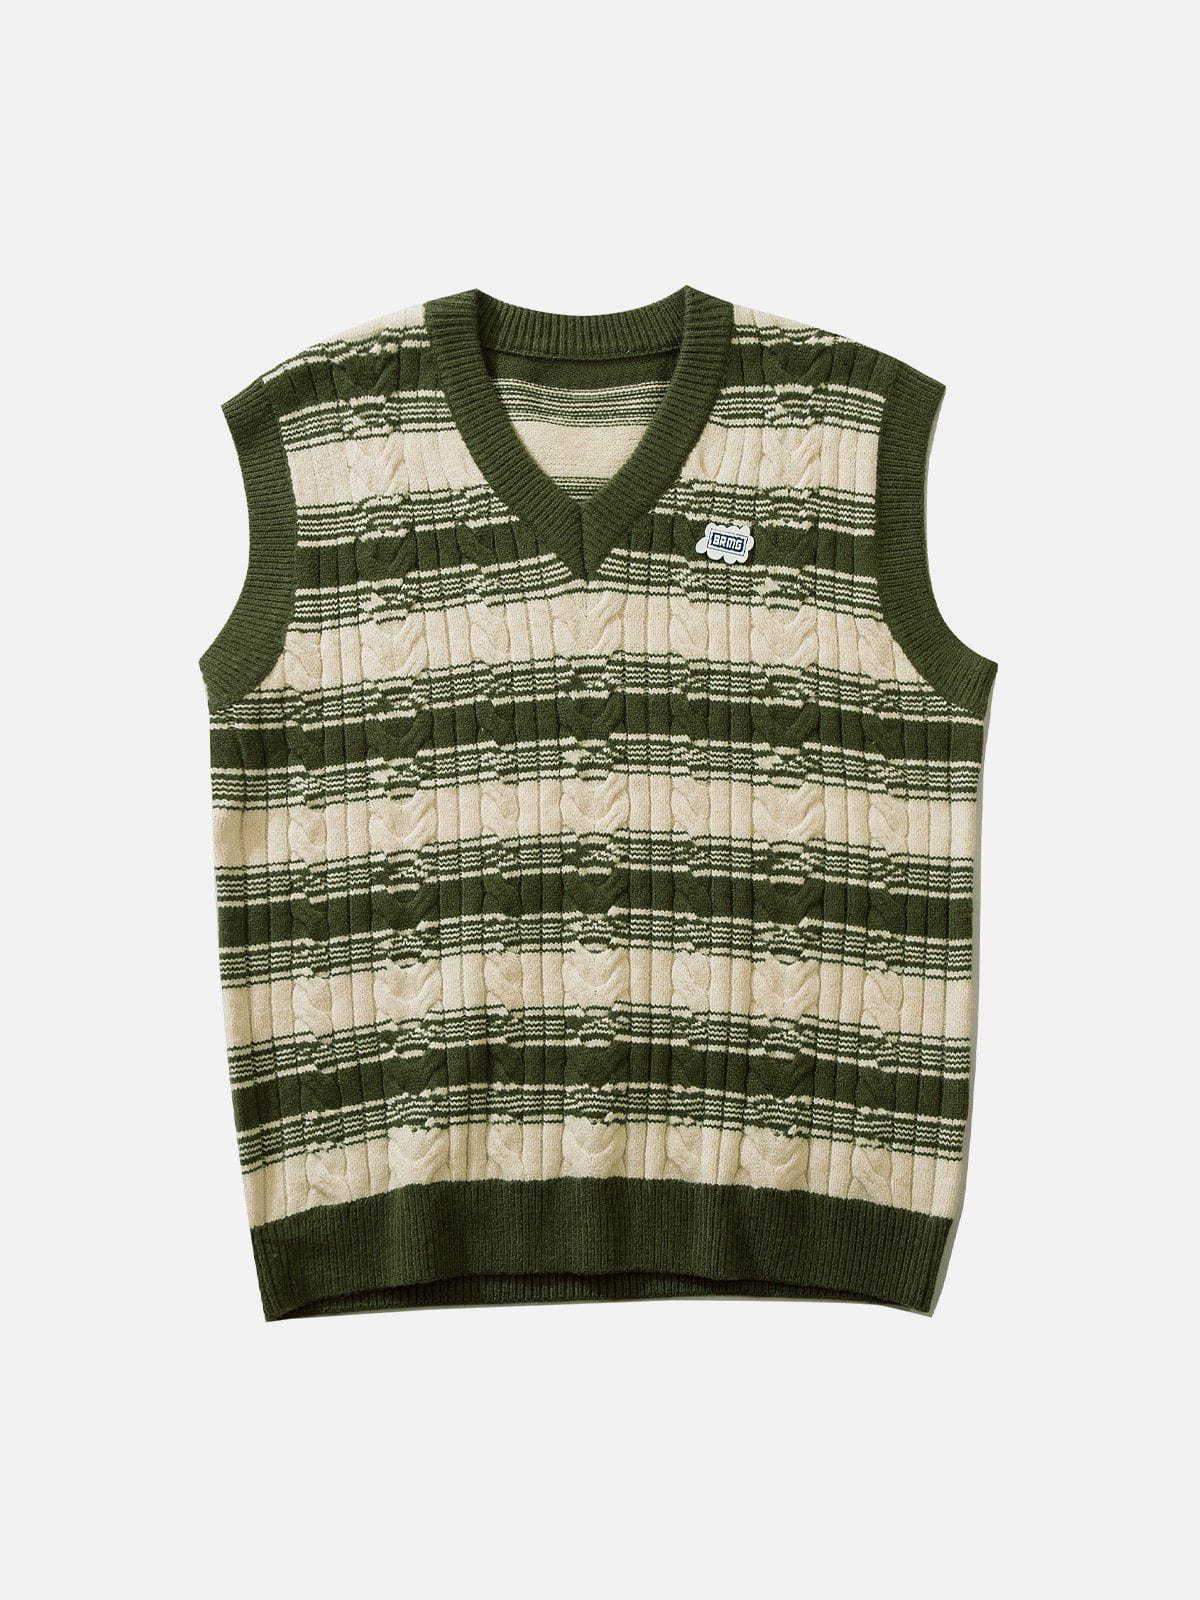 Majesda® - Colorblock Stripe Sweater Vest outfit ideas streetwear fashion